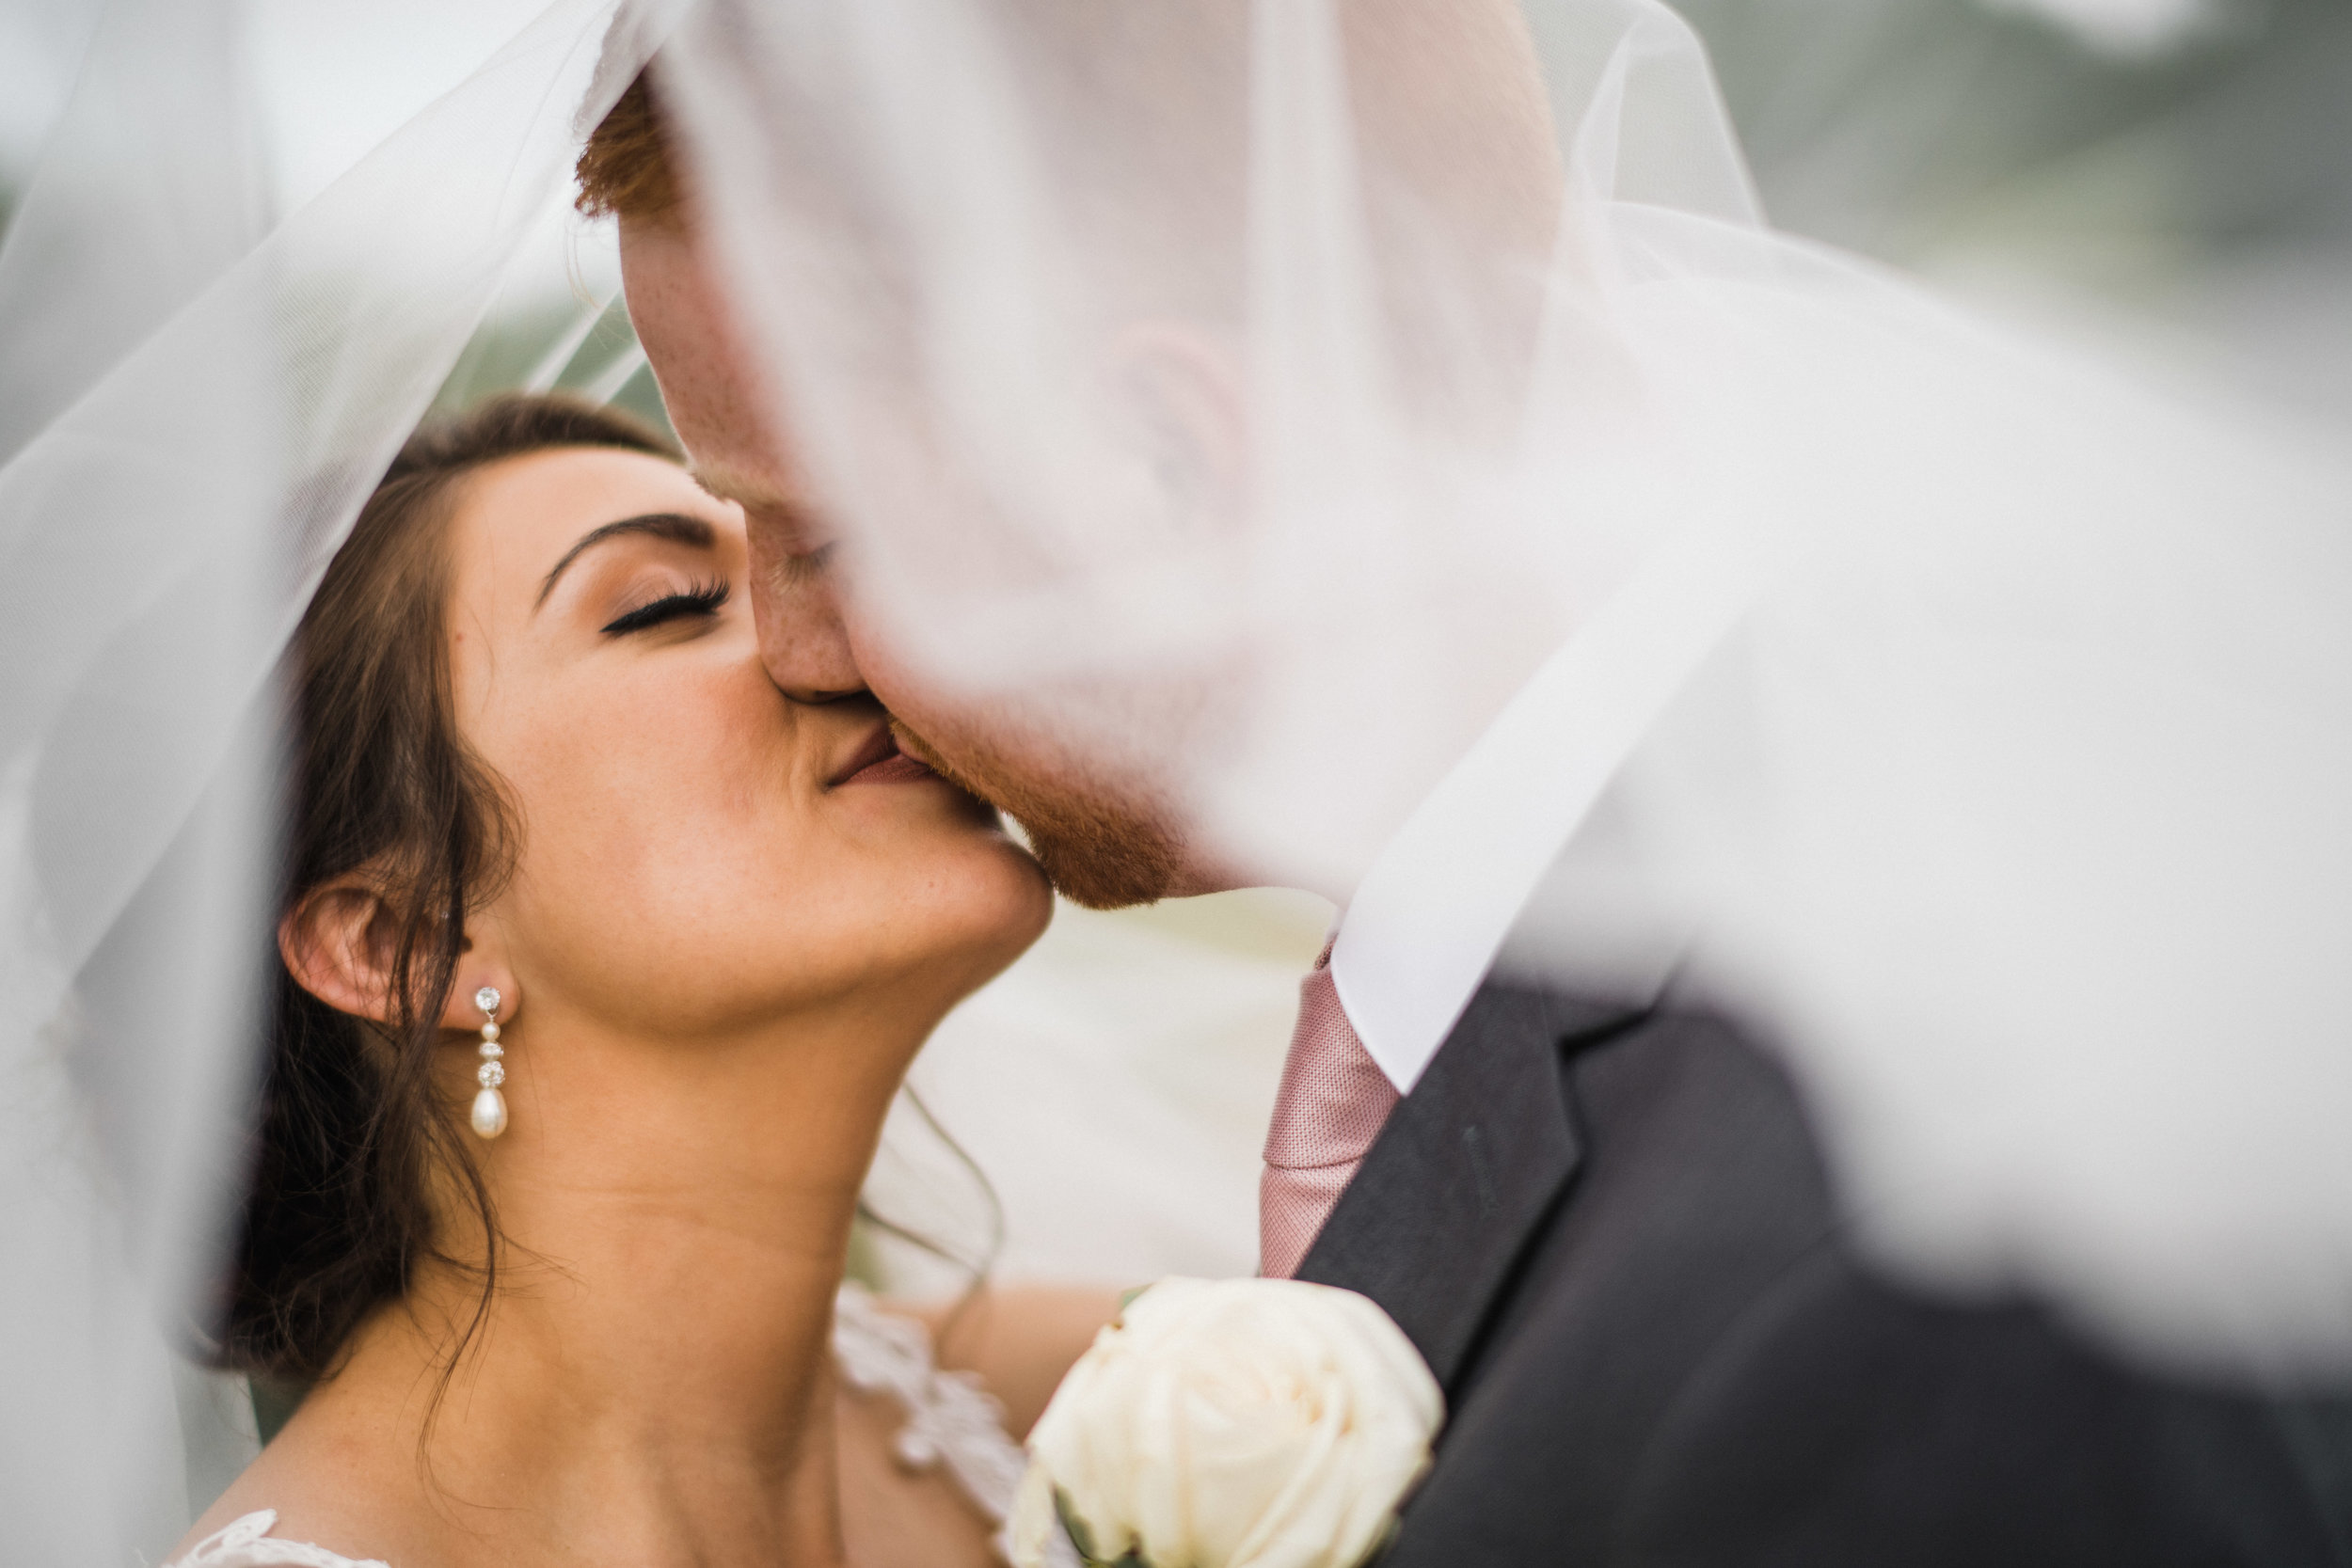 Romantic Veil Shot of Bride and Groom | Des Moines, IA Photographer Austin Day